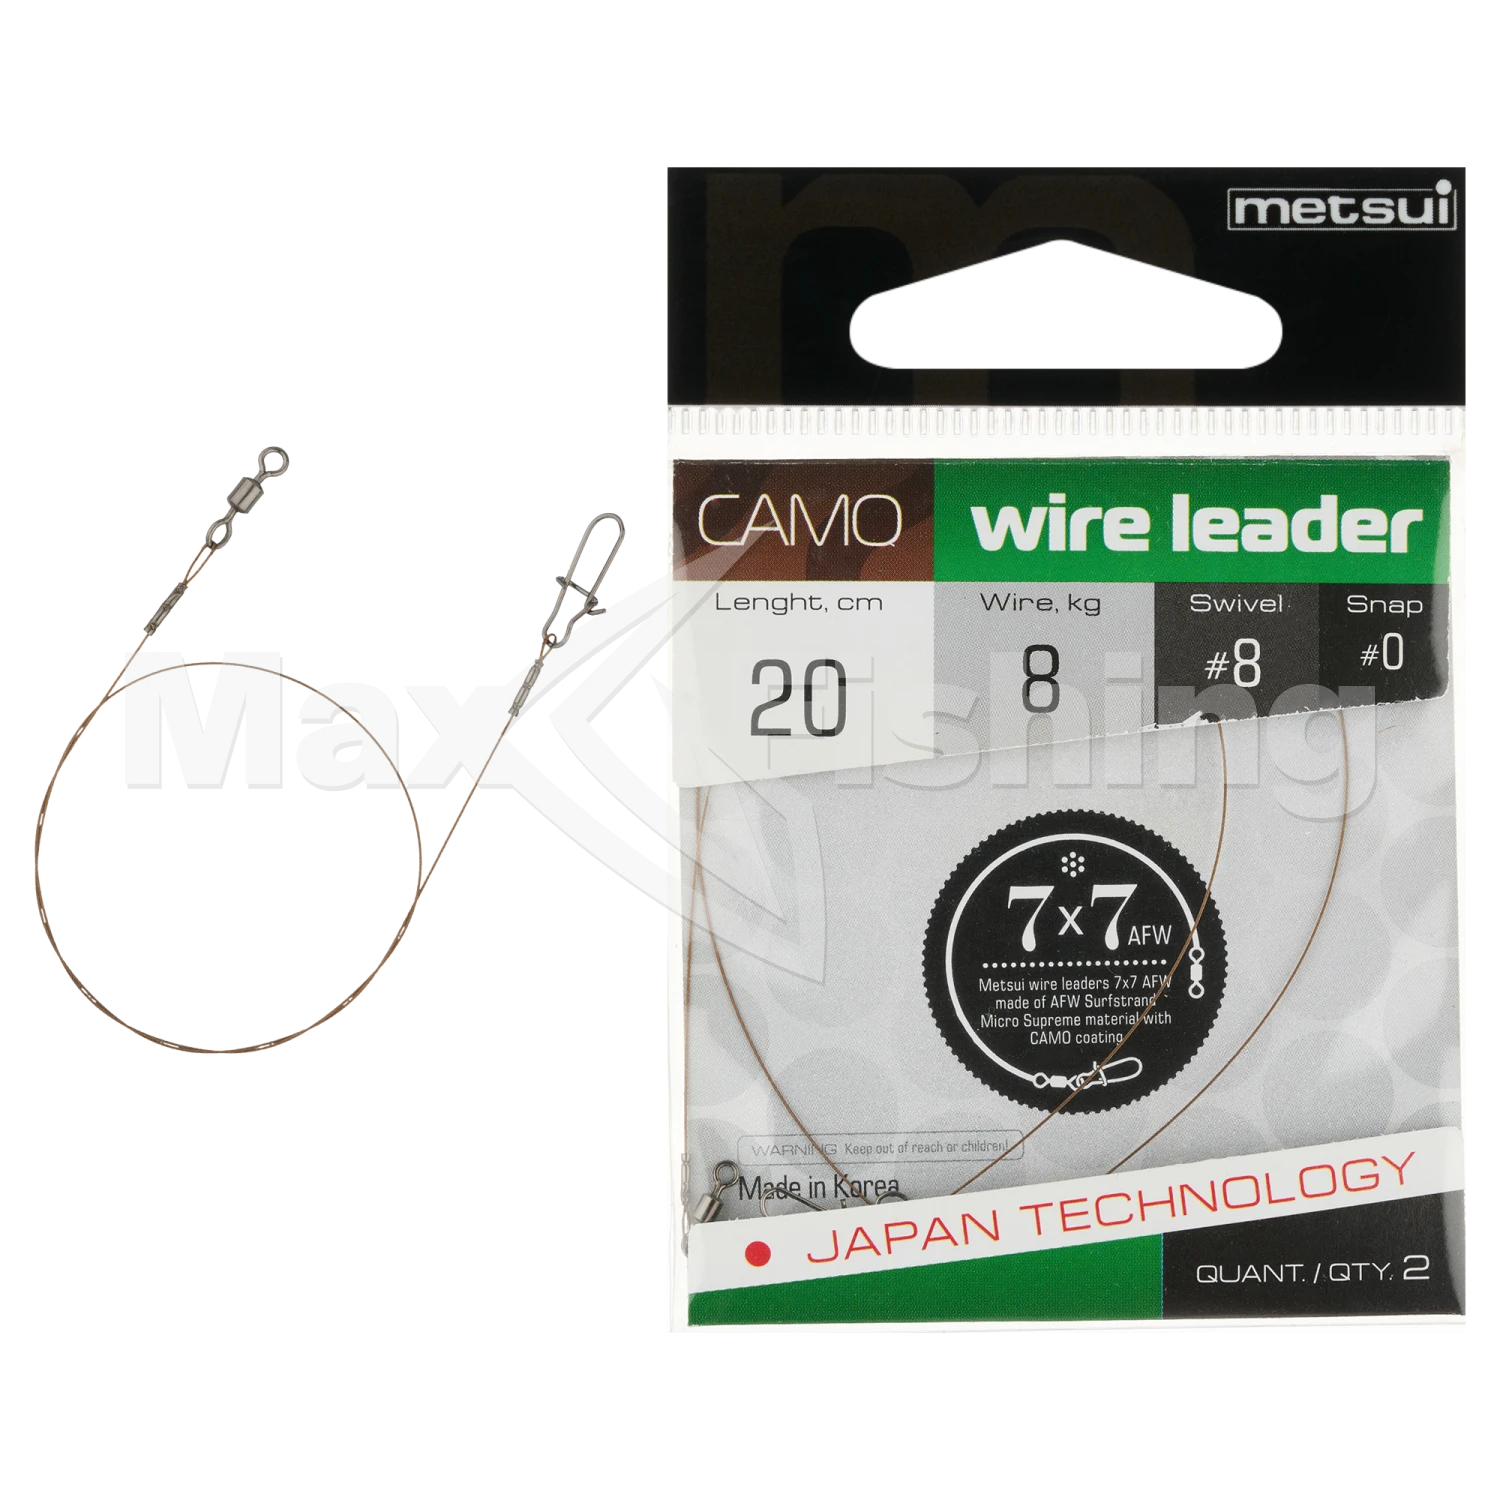 Поводок Metsui Camo Wire Leader AFW 7x7 8кг 20см